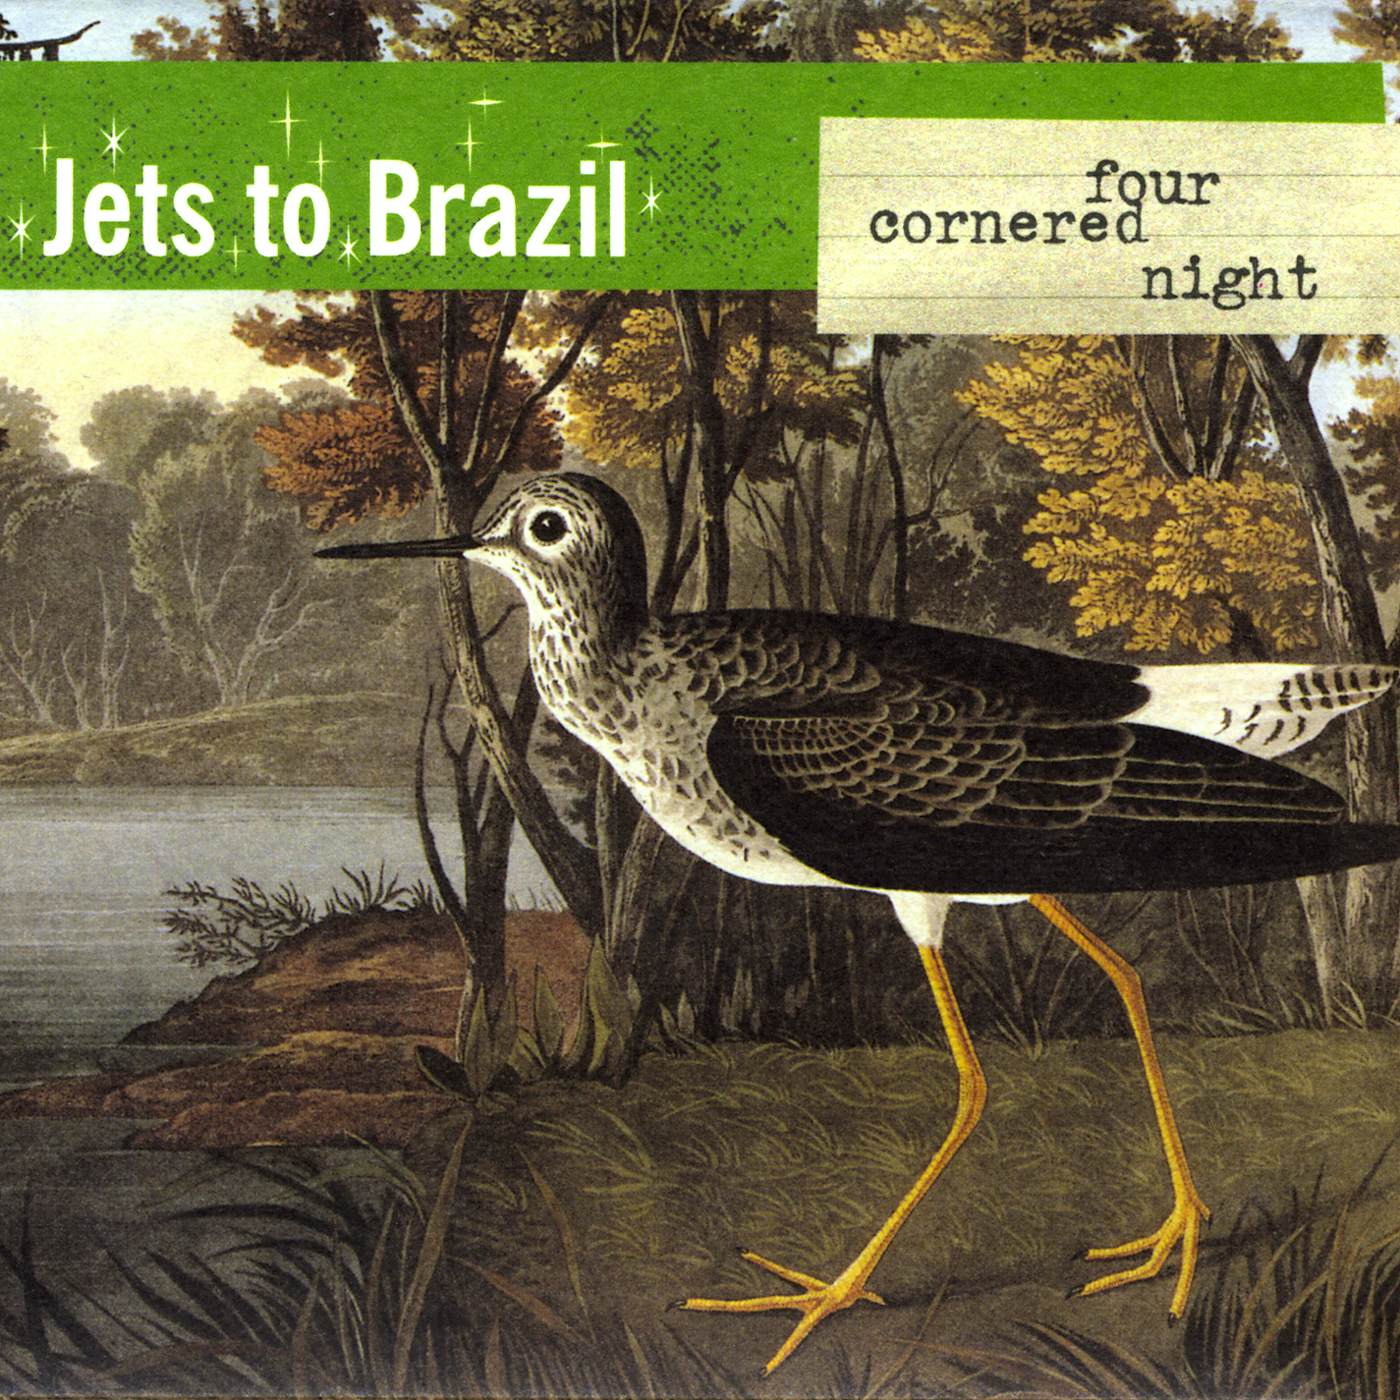 Jets To Brazil Four Cornered Night Vinyl Record